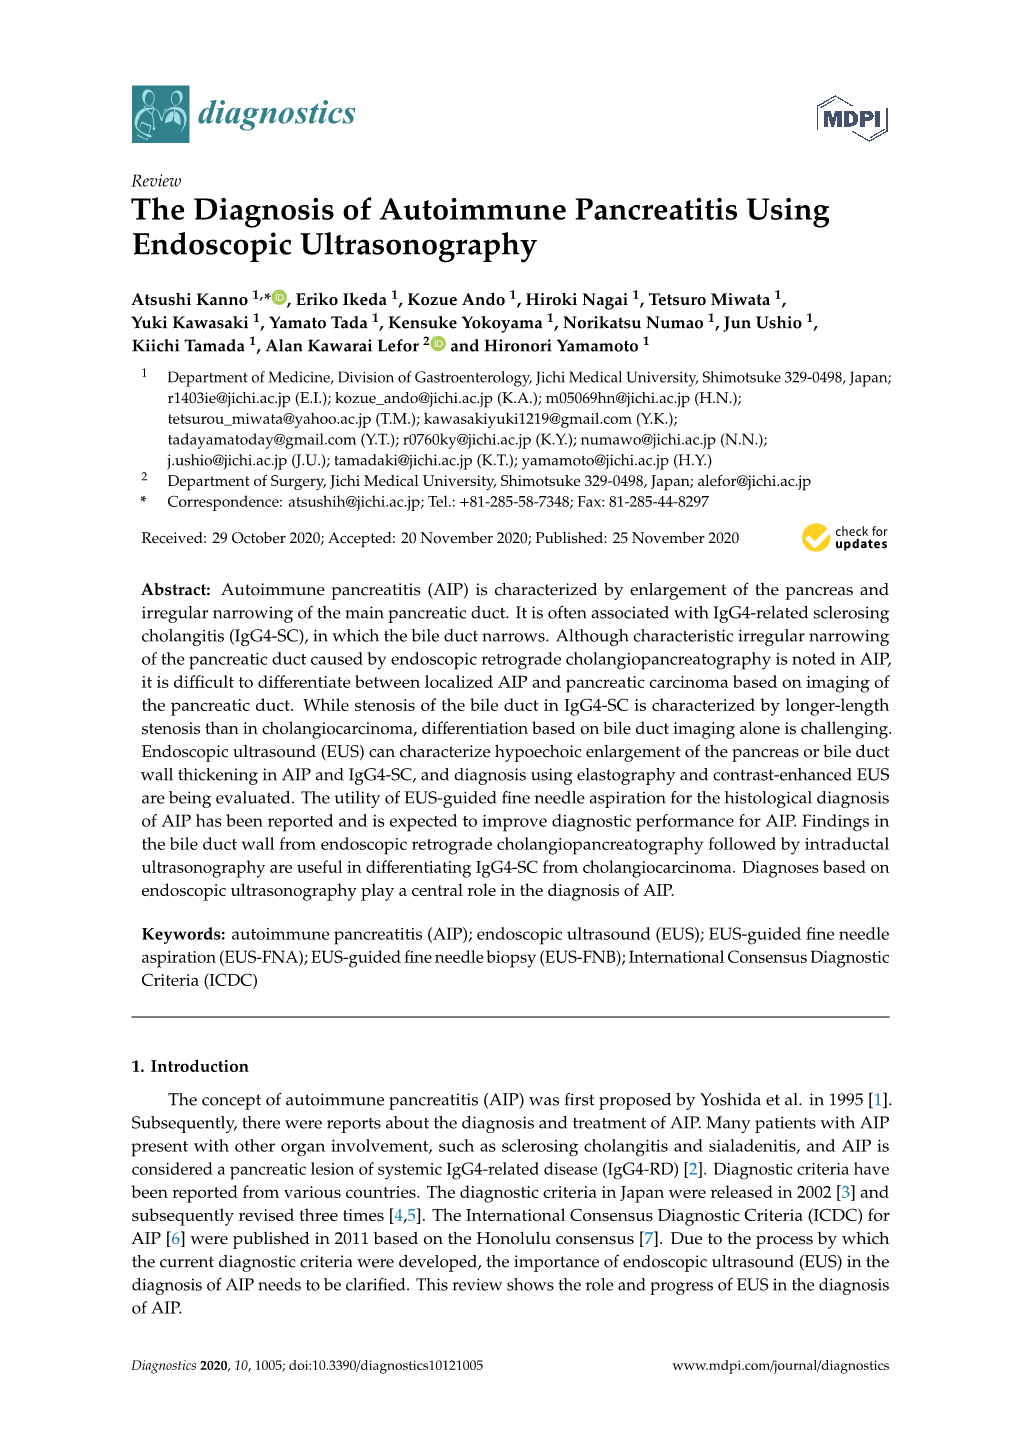 The Diagnosis of Autoimmune Pancreatitis Using Endoscopic Ultrasonography